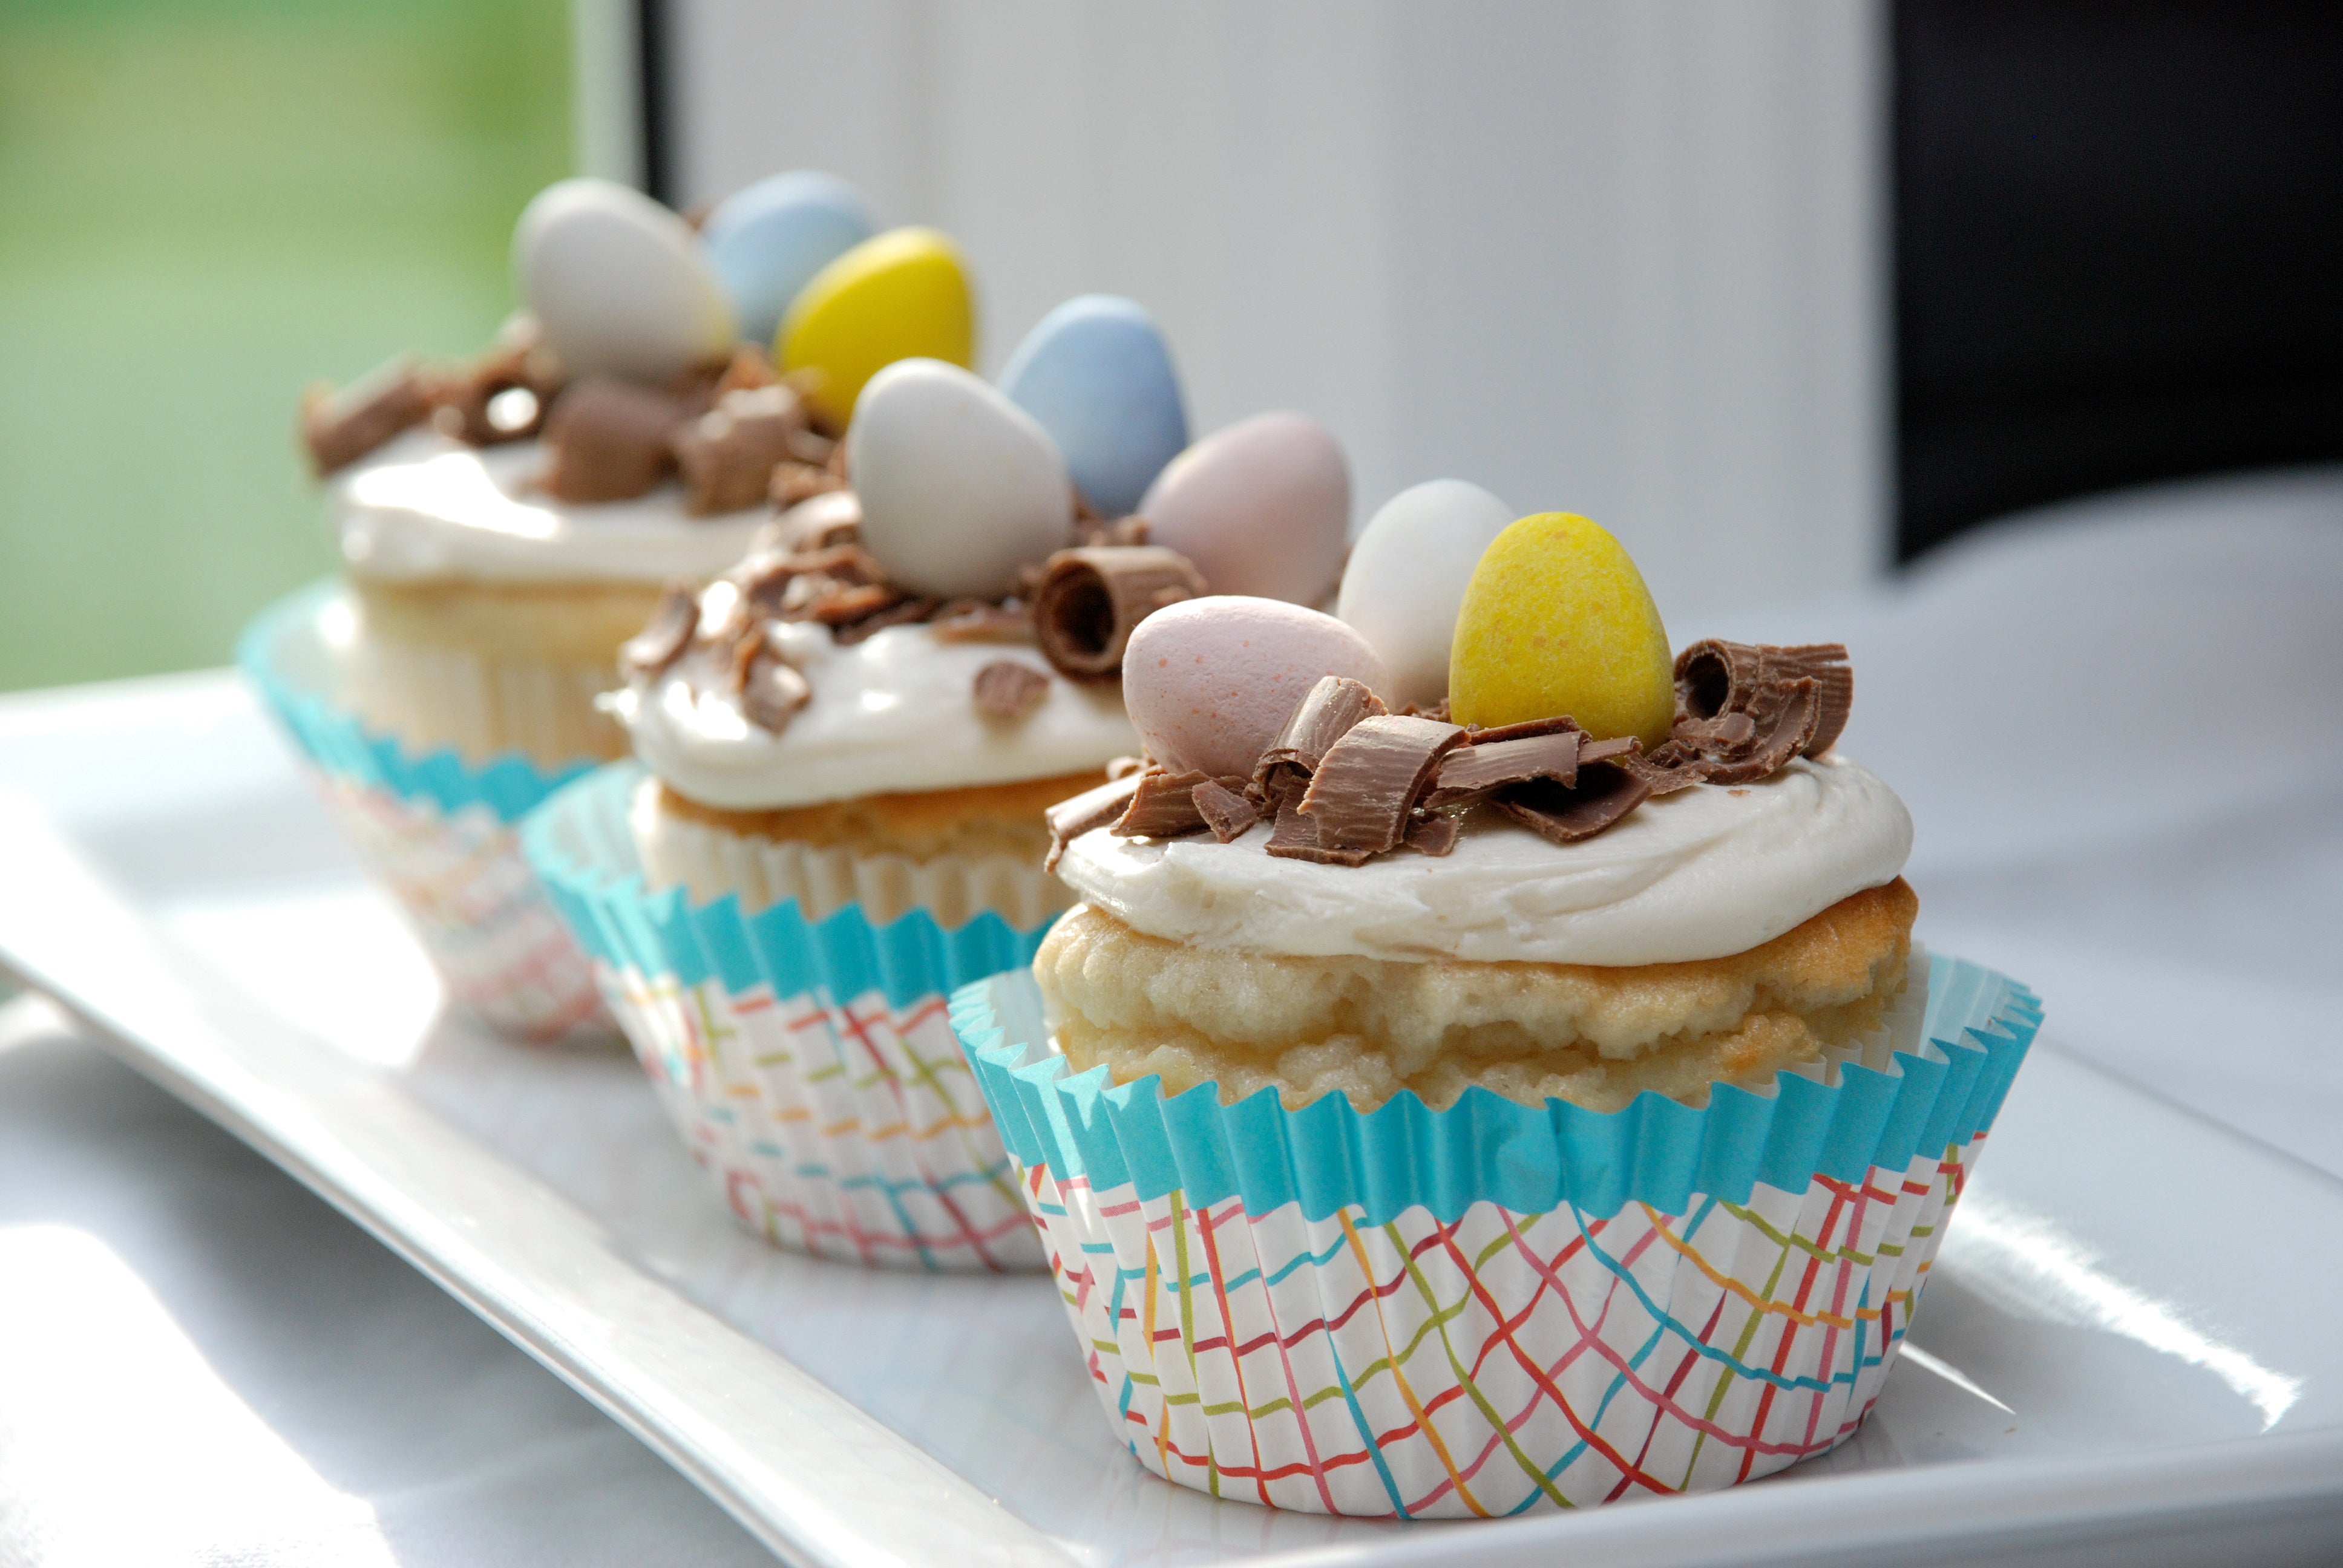 White Easter Egg Cupcakes